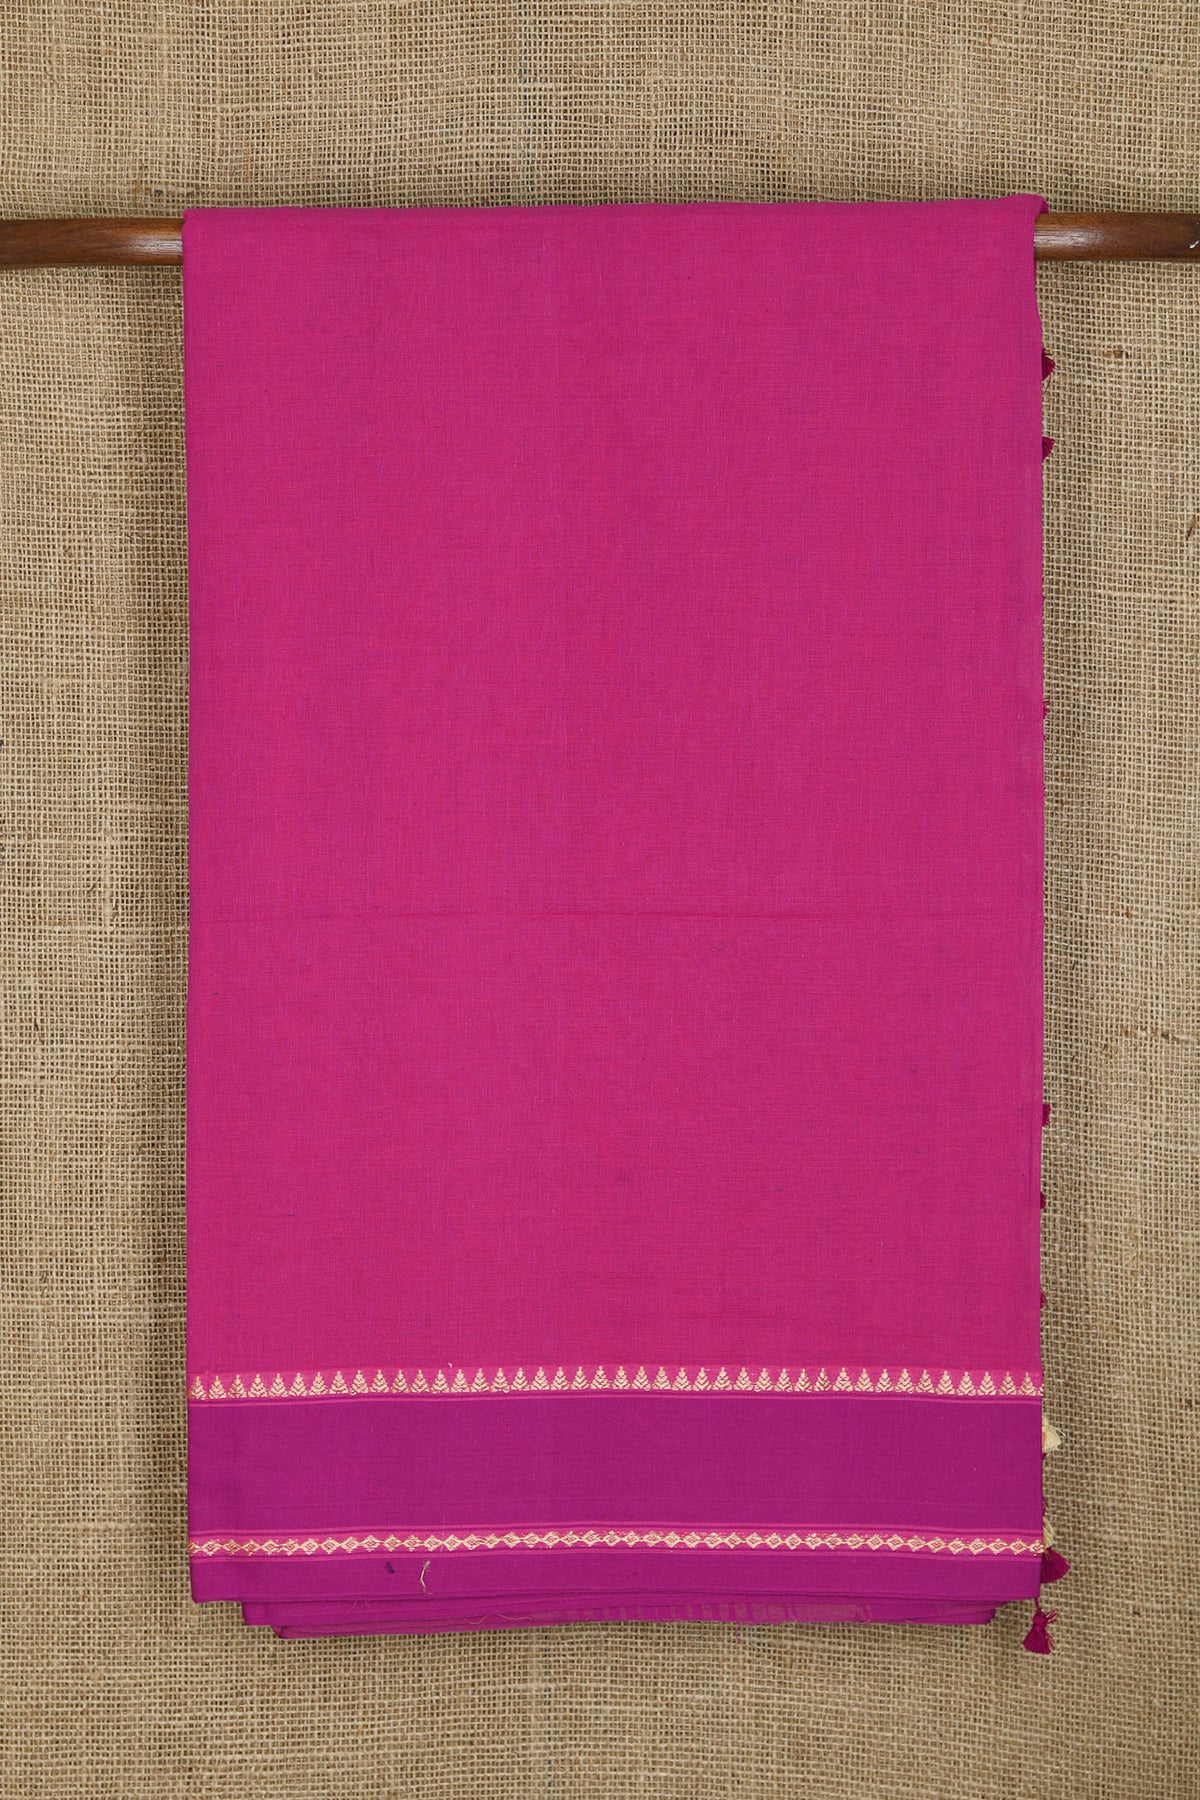 Thread Work Border In Plain Magenta Pink Bengal Cotton Saree